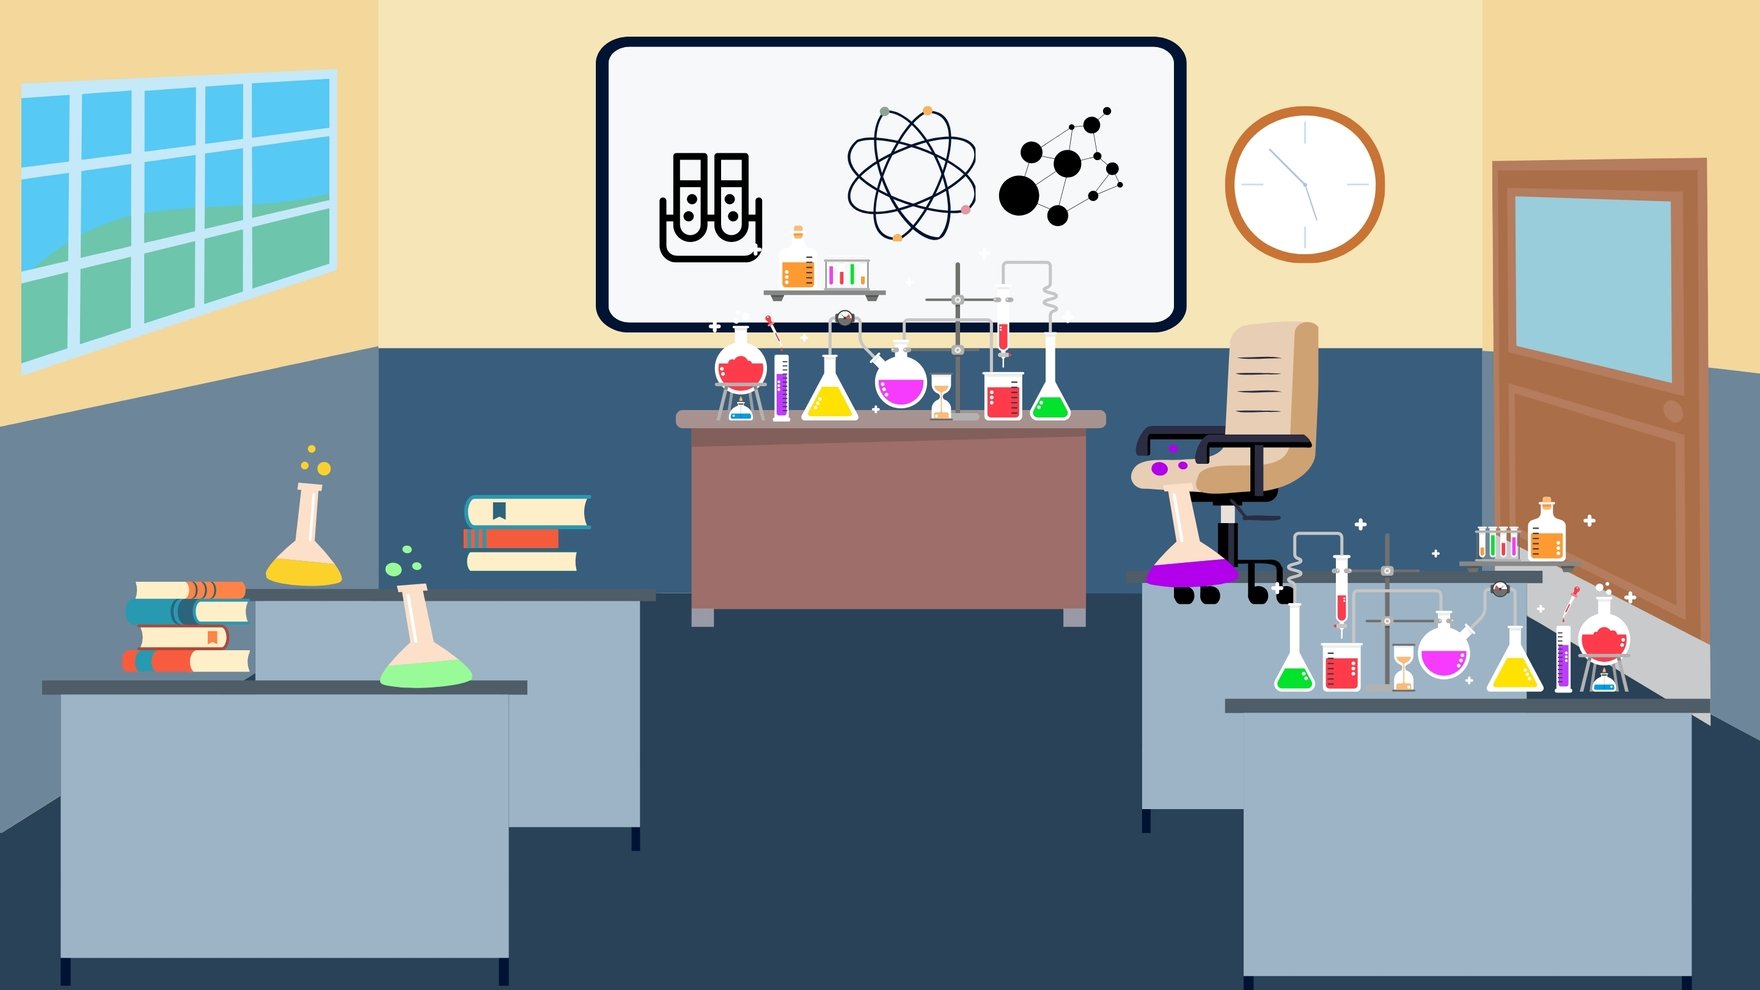 Free Chemistry Classroom Background in Illustrator, EPS, SVG, JPG, PNG